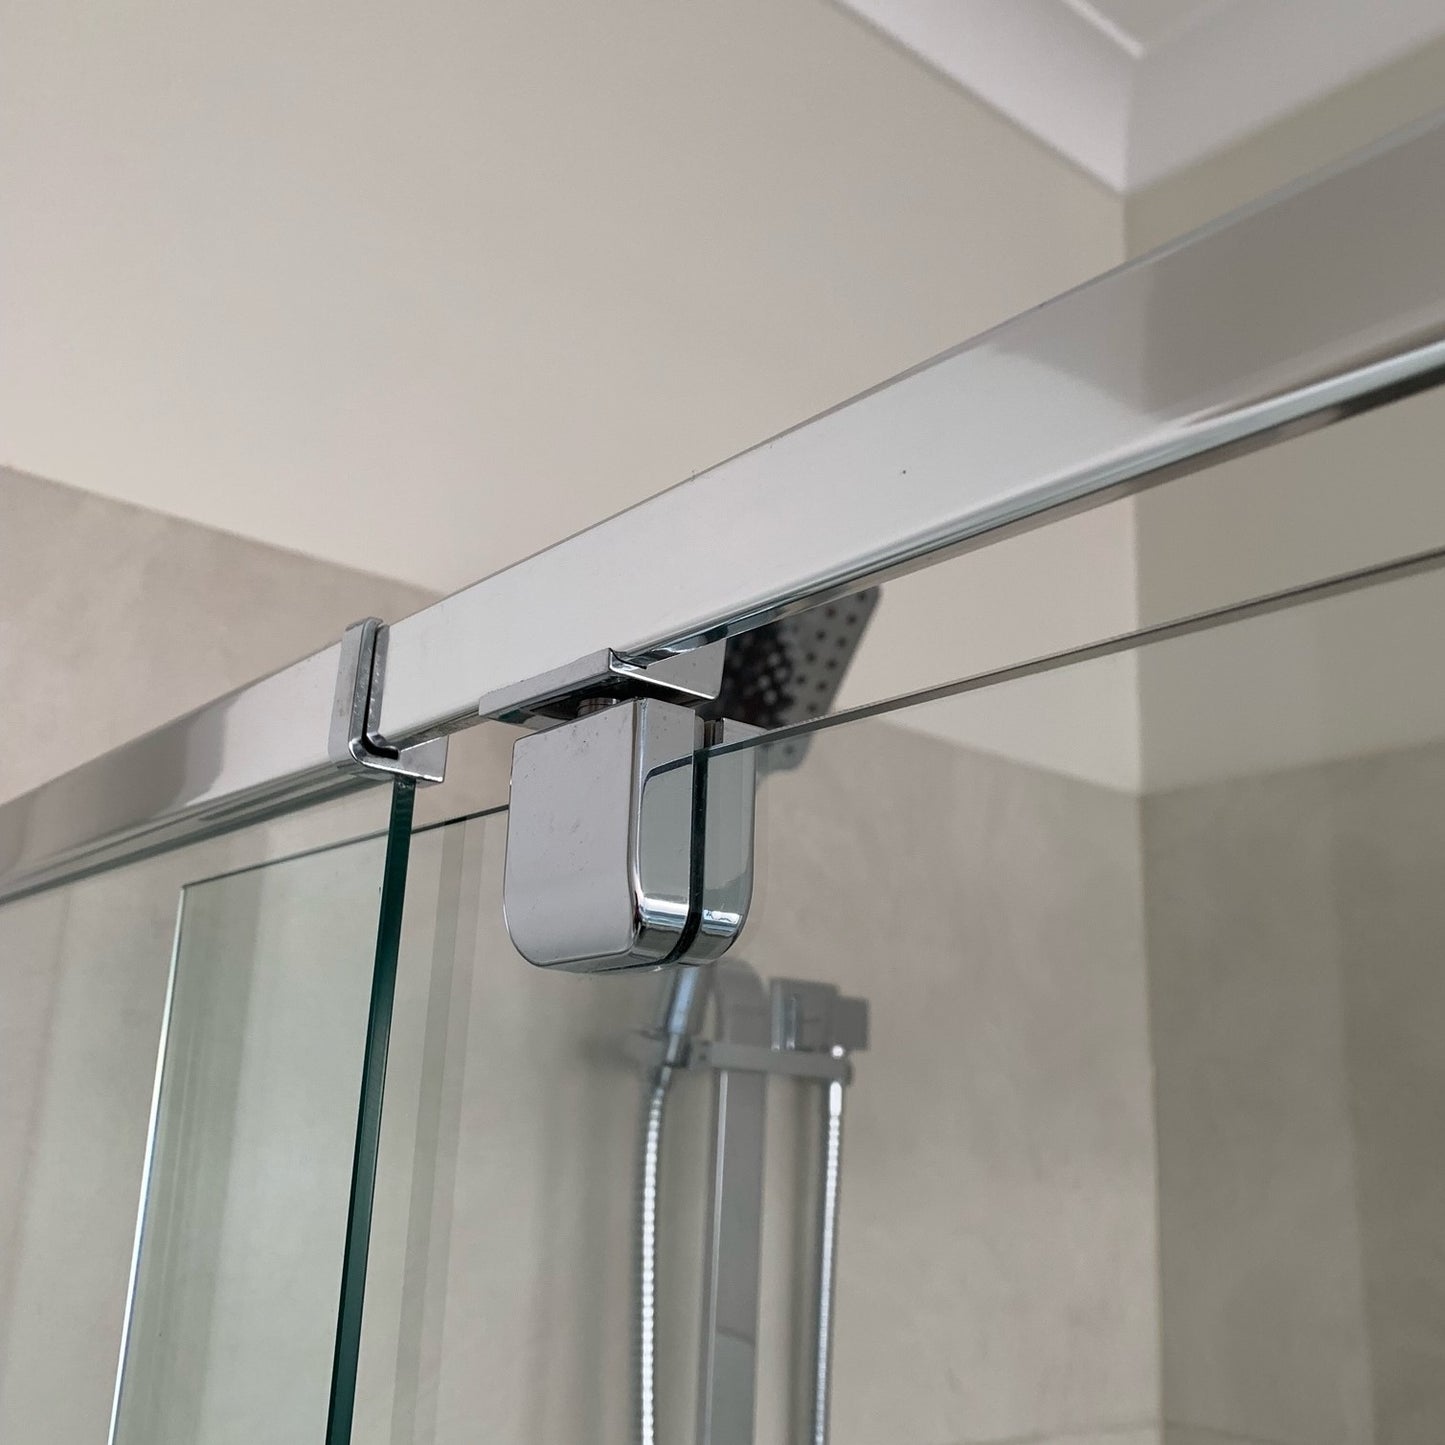 Shower pivot repair kit - Pivotech, suits Showerama and more Semi-Frameless - Chrome